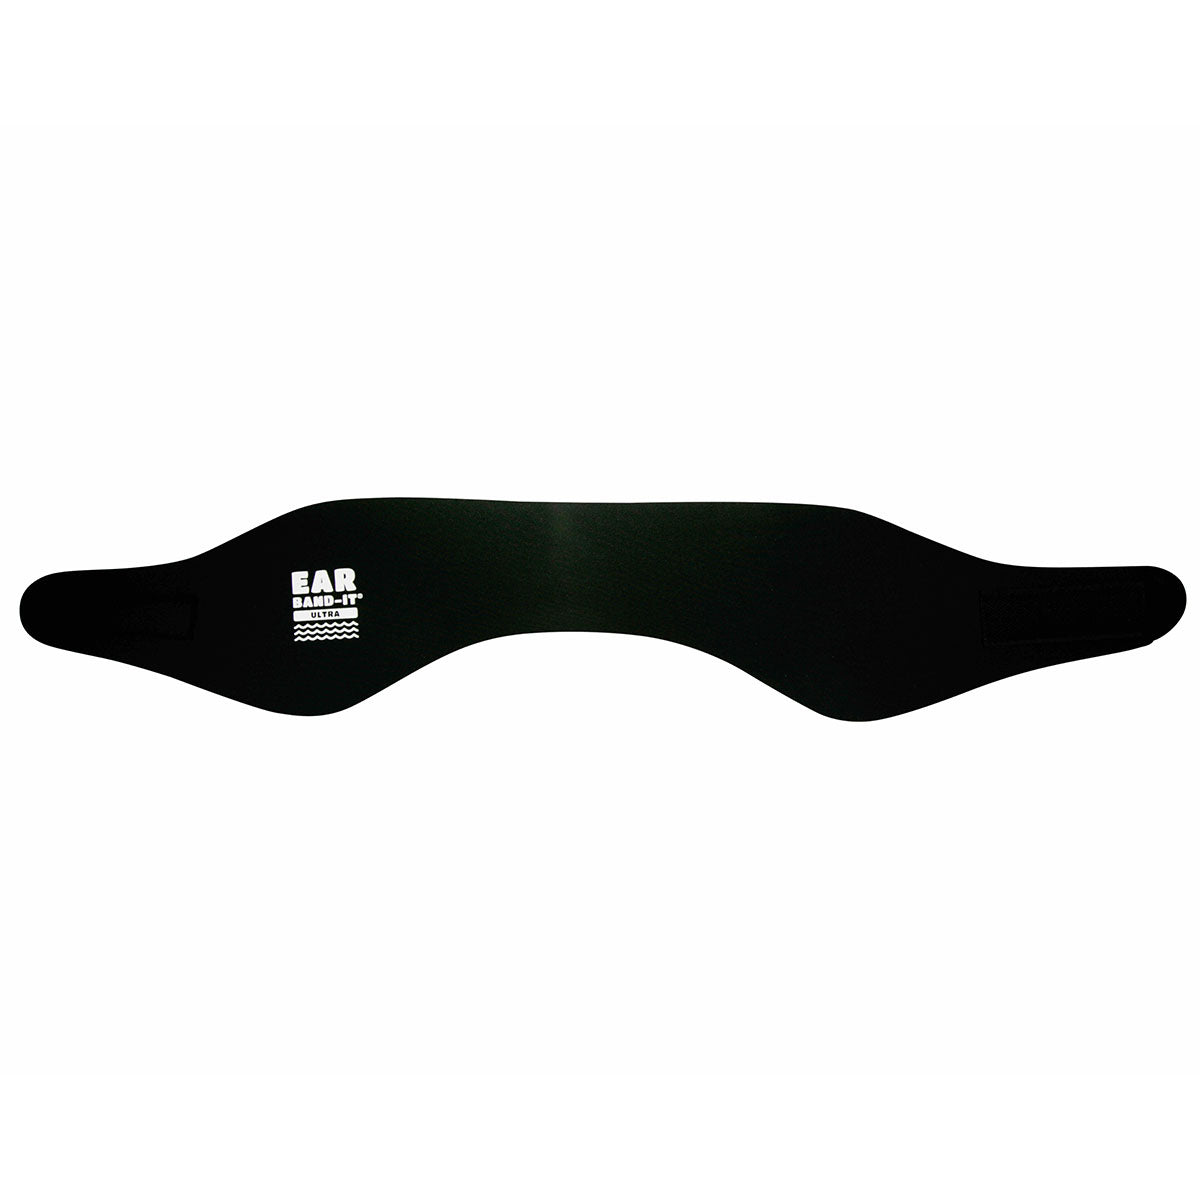 Ear Band-It Ultra Swimmer's Headband - Black 3